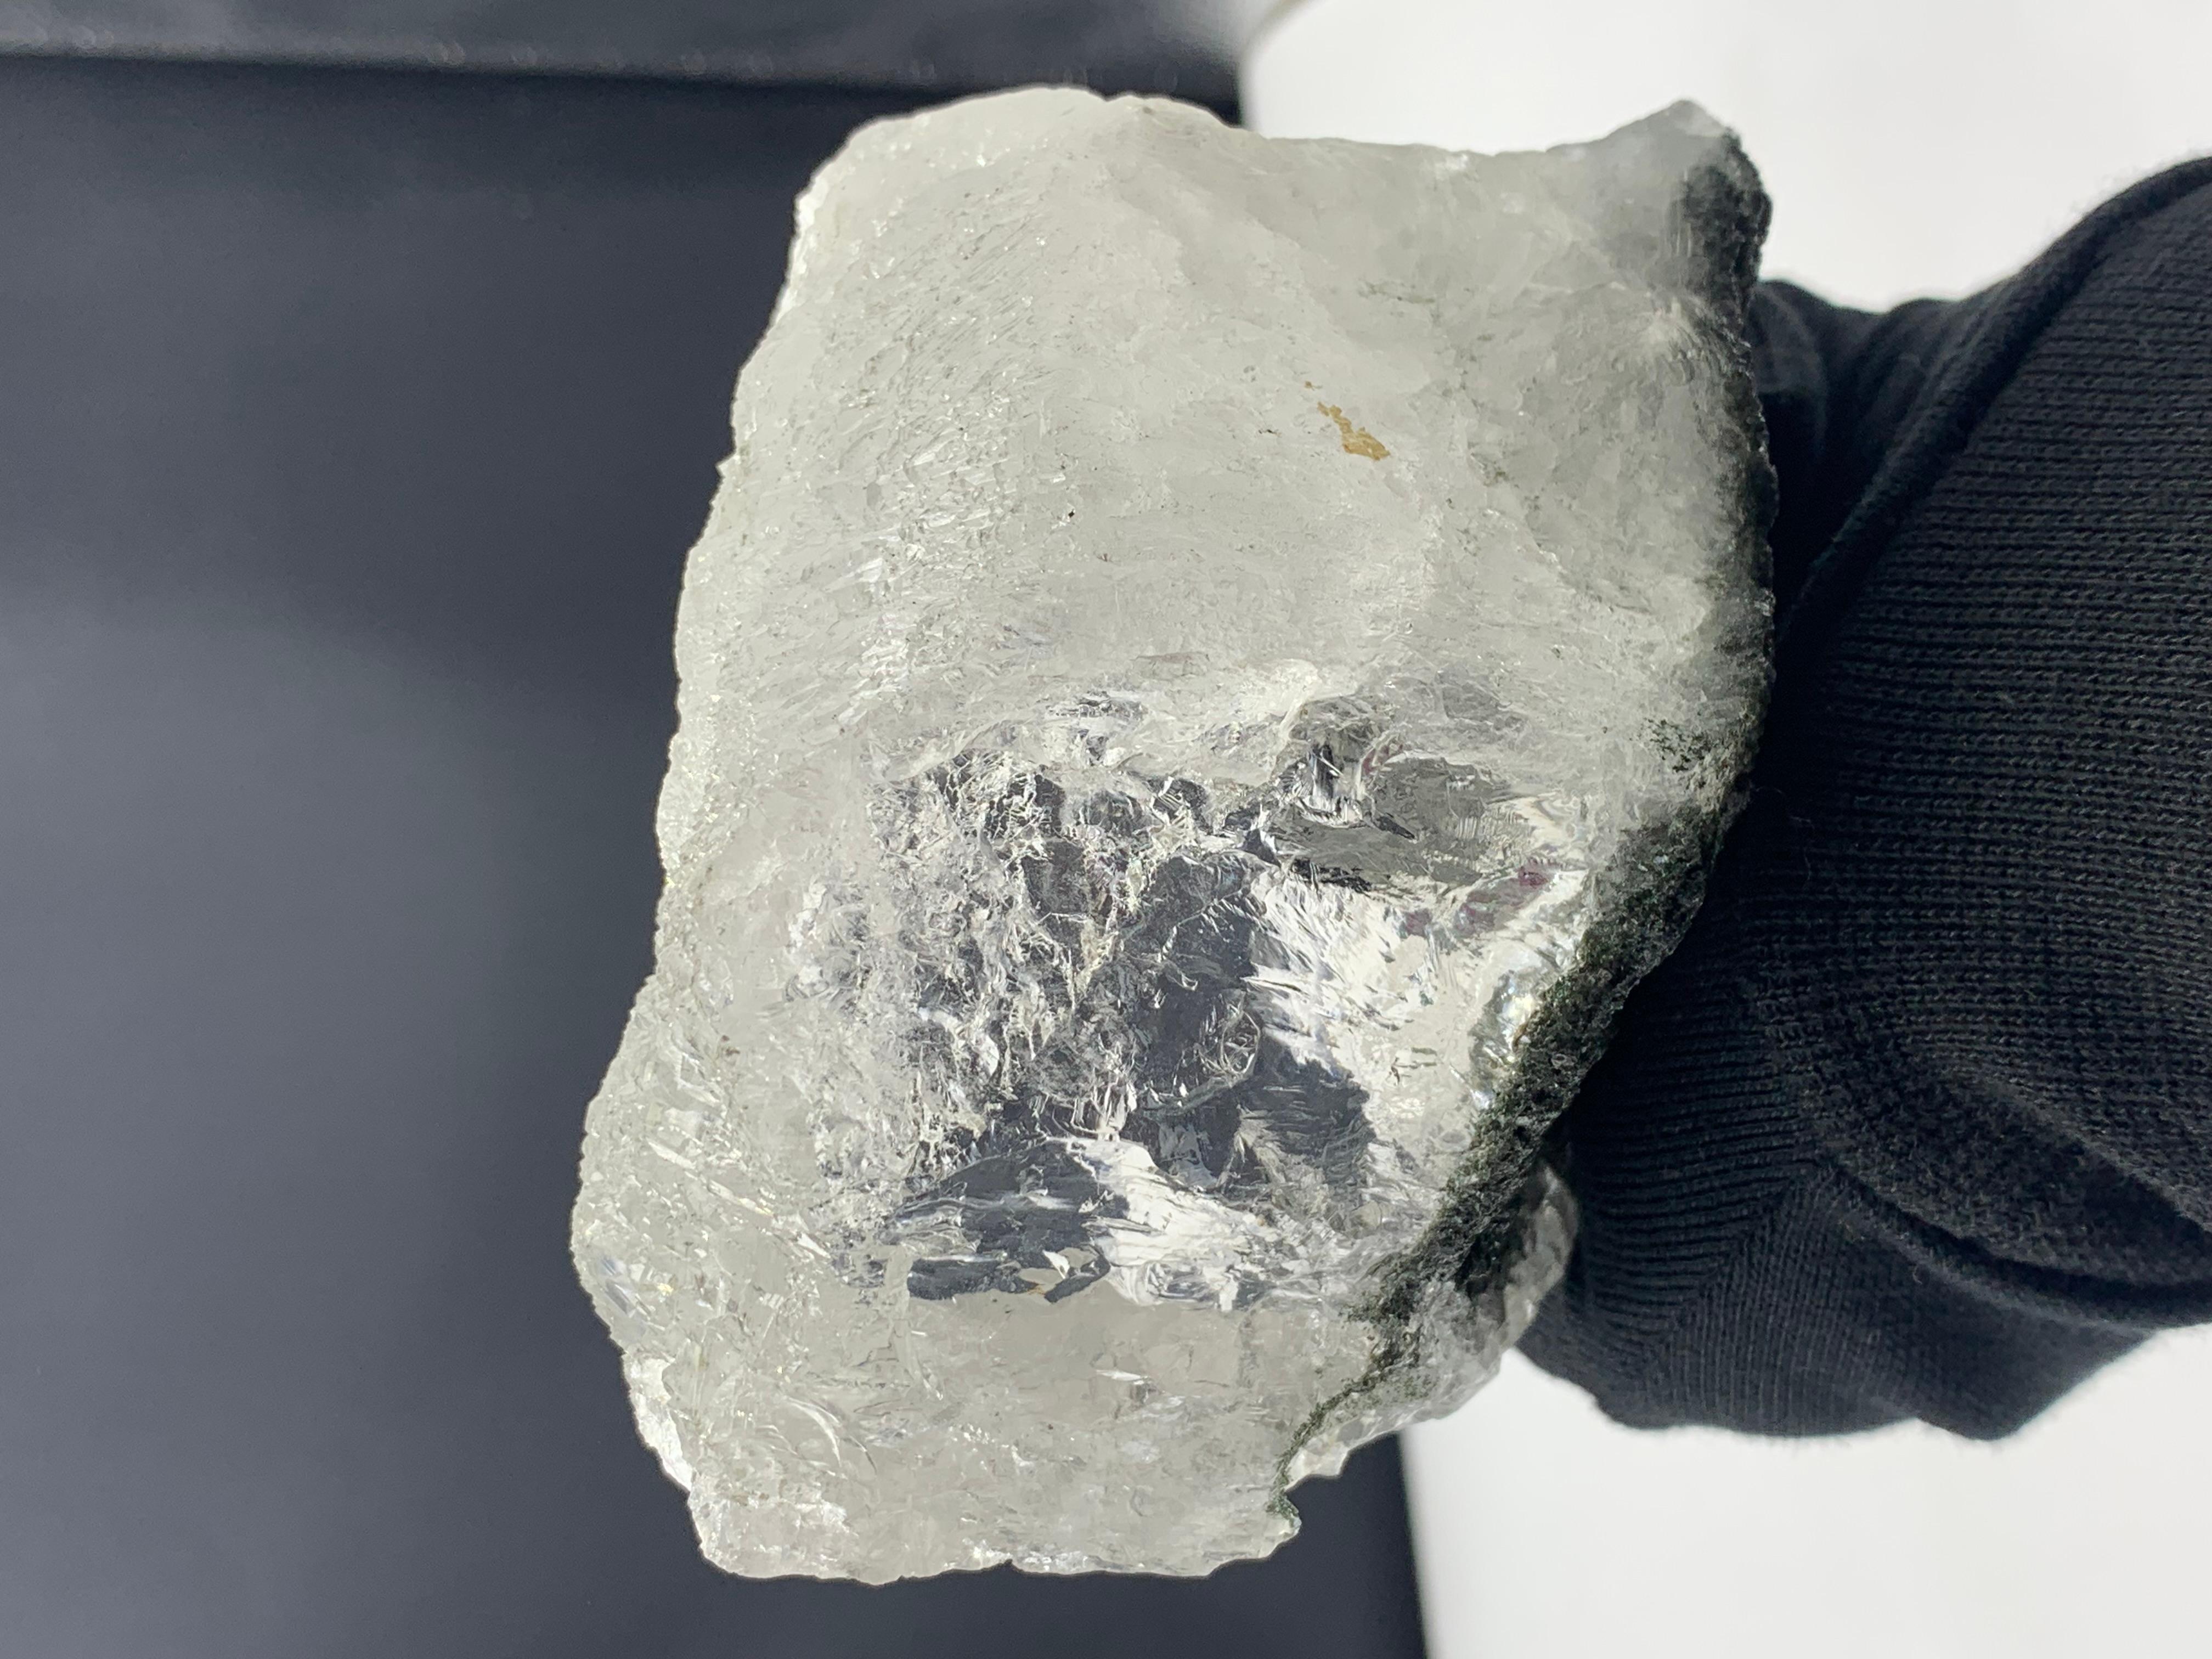 1017.03 Gram Gigantic Quartz Crystal From Skardu, Pakistan 

Weight: 1017.03 Gram 
Dimension: 9.9 x 10.2 x 6.9 Cm 
Origin : Skardu, Pakistan 

Quartz is our most common mineral. Quartz is made of the two most abundant chemical elements on Earth: